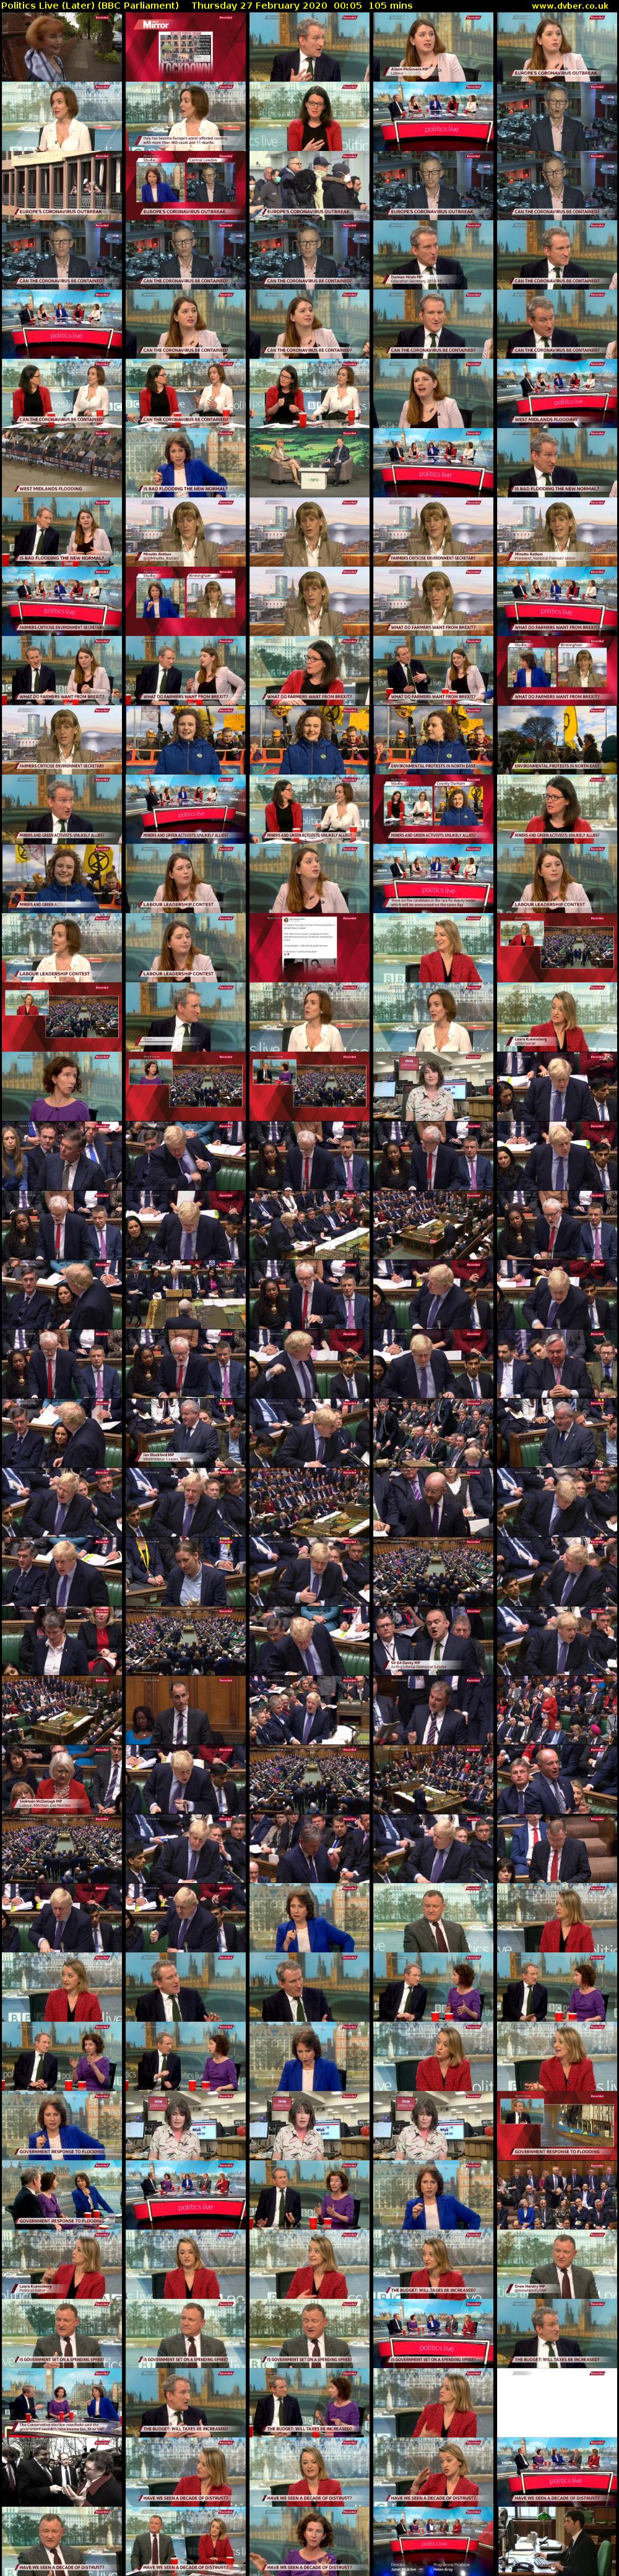 Politics Live (Later) (BBC Parliament) Thursday 27 February 2020 00:05 - 01:50